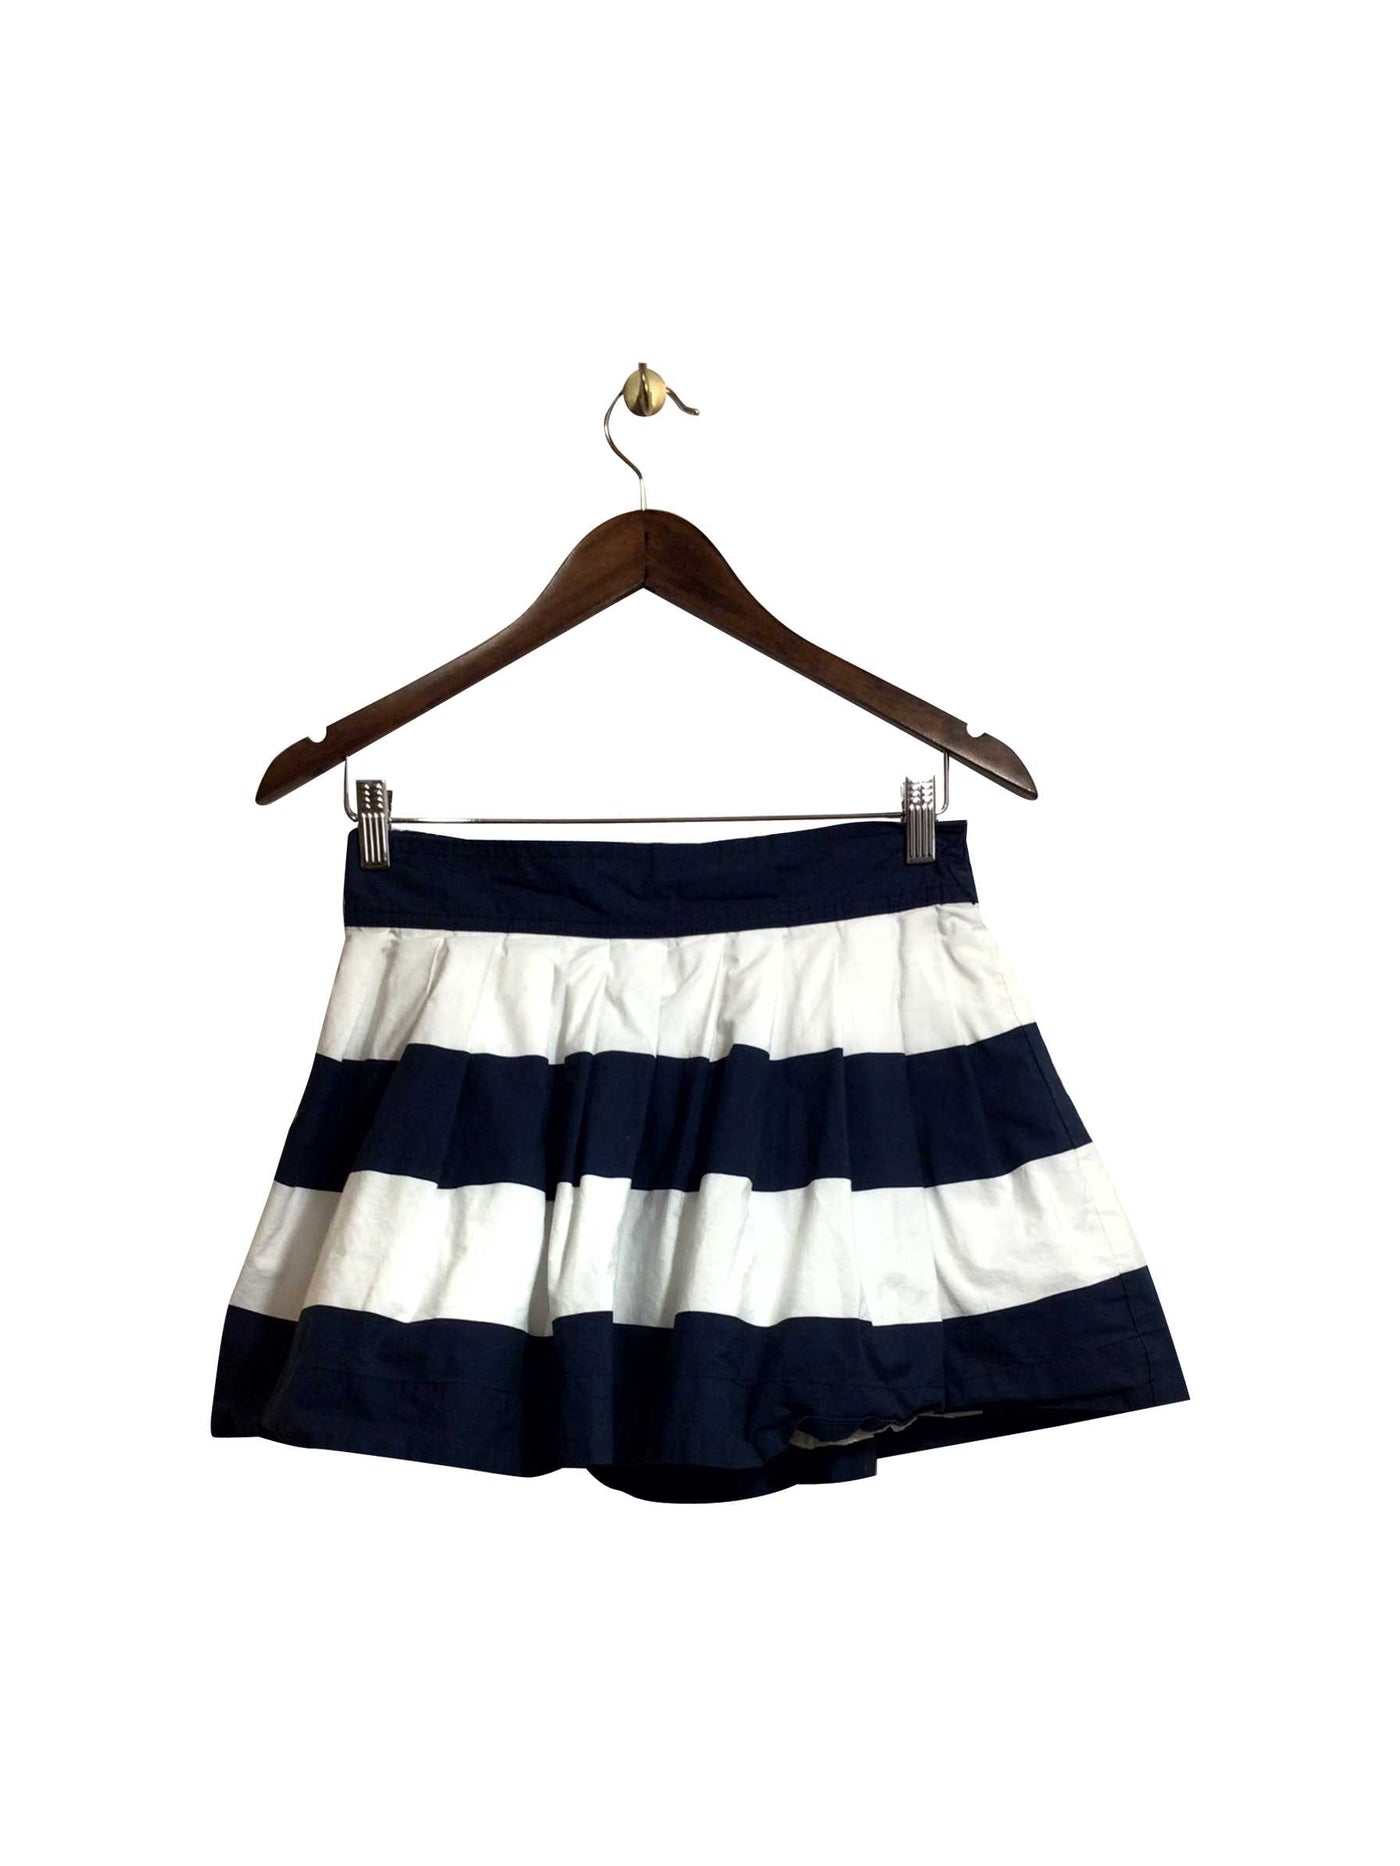 ABERCROMBIE & FITCH Regular fit Skirt in Blue - Size M | 13.99 $ KOOP